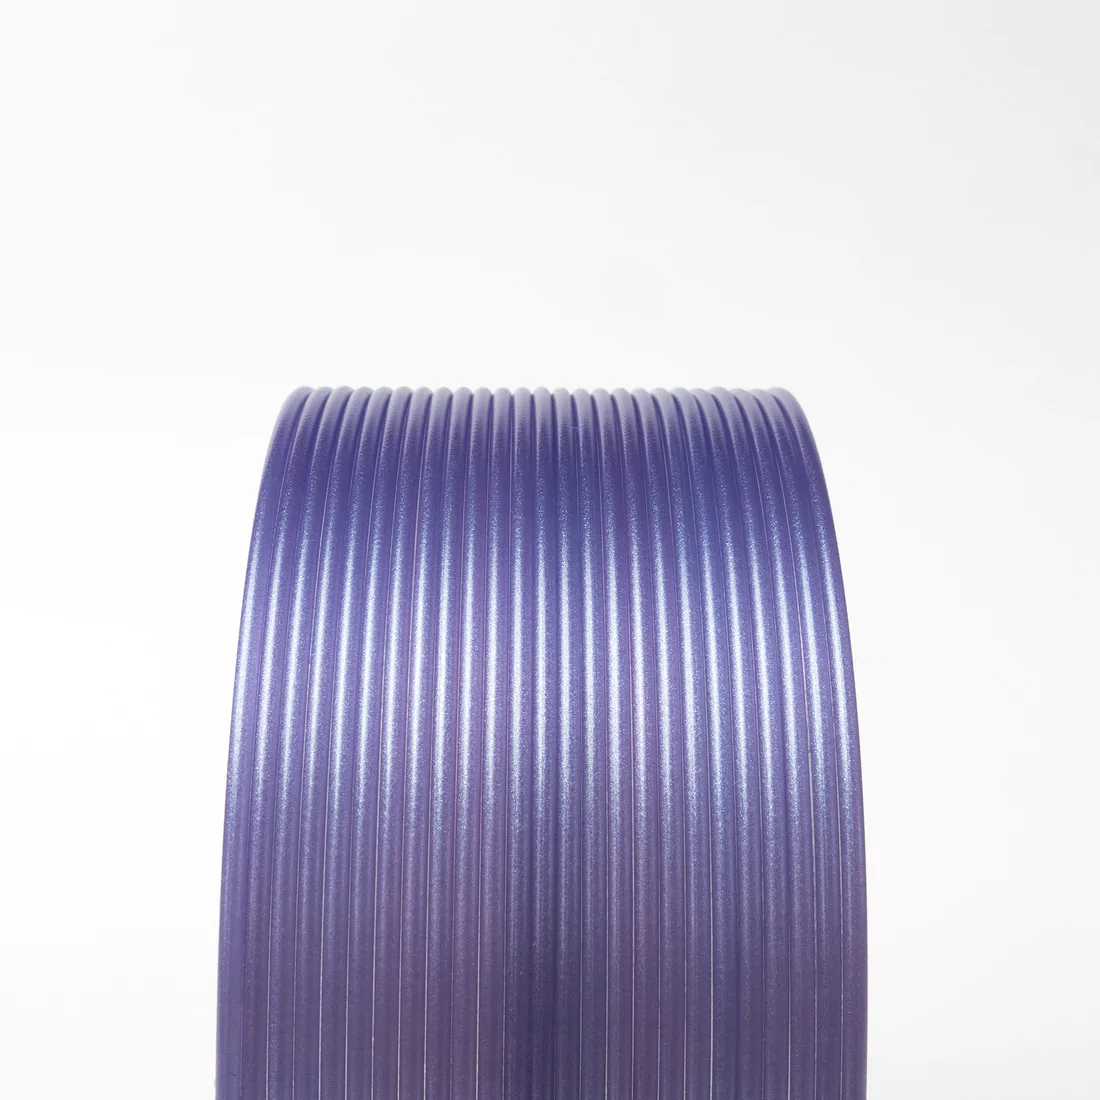 Dragon Scale Purple HTPLA 1.75mm 500gms 3D printing filament